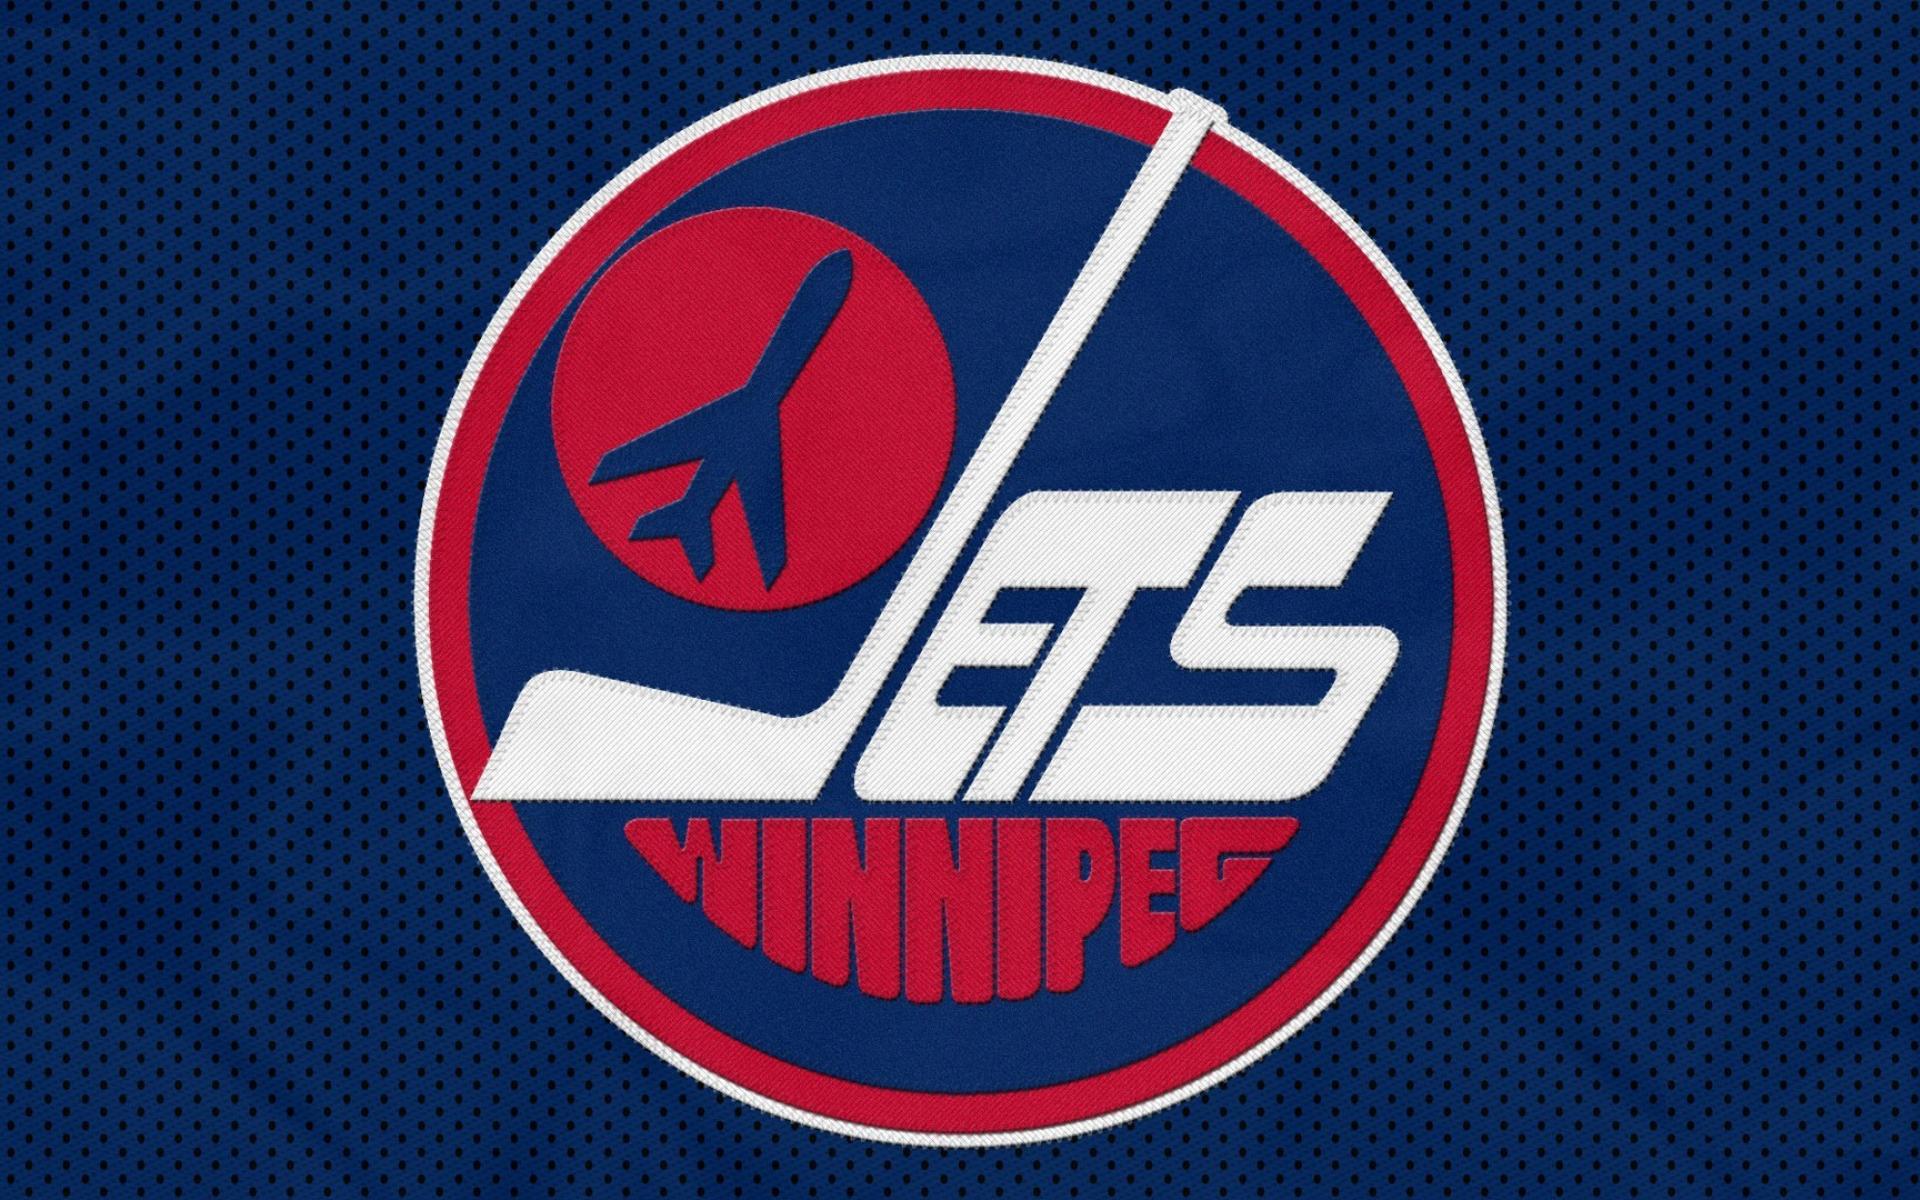 Nhl jersey ice logos winnipeg jets 80s wallpaper 56398